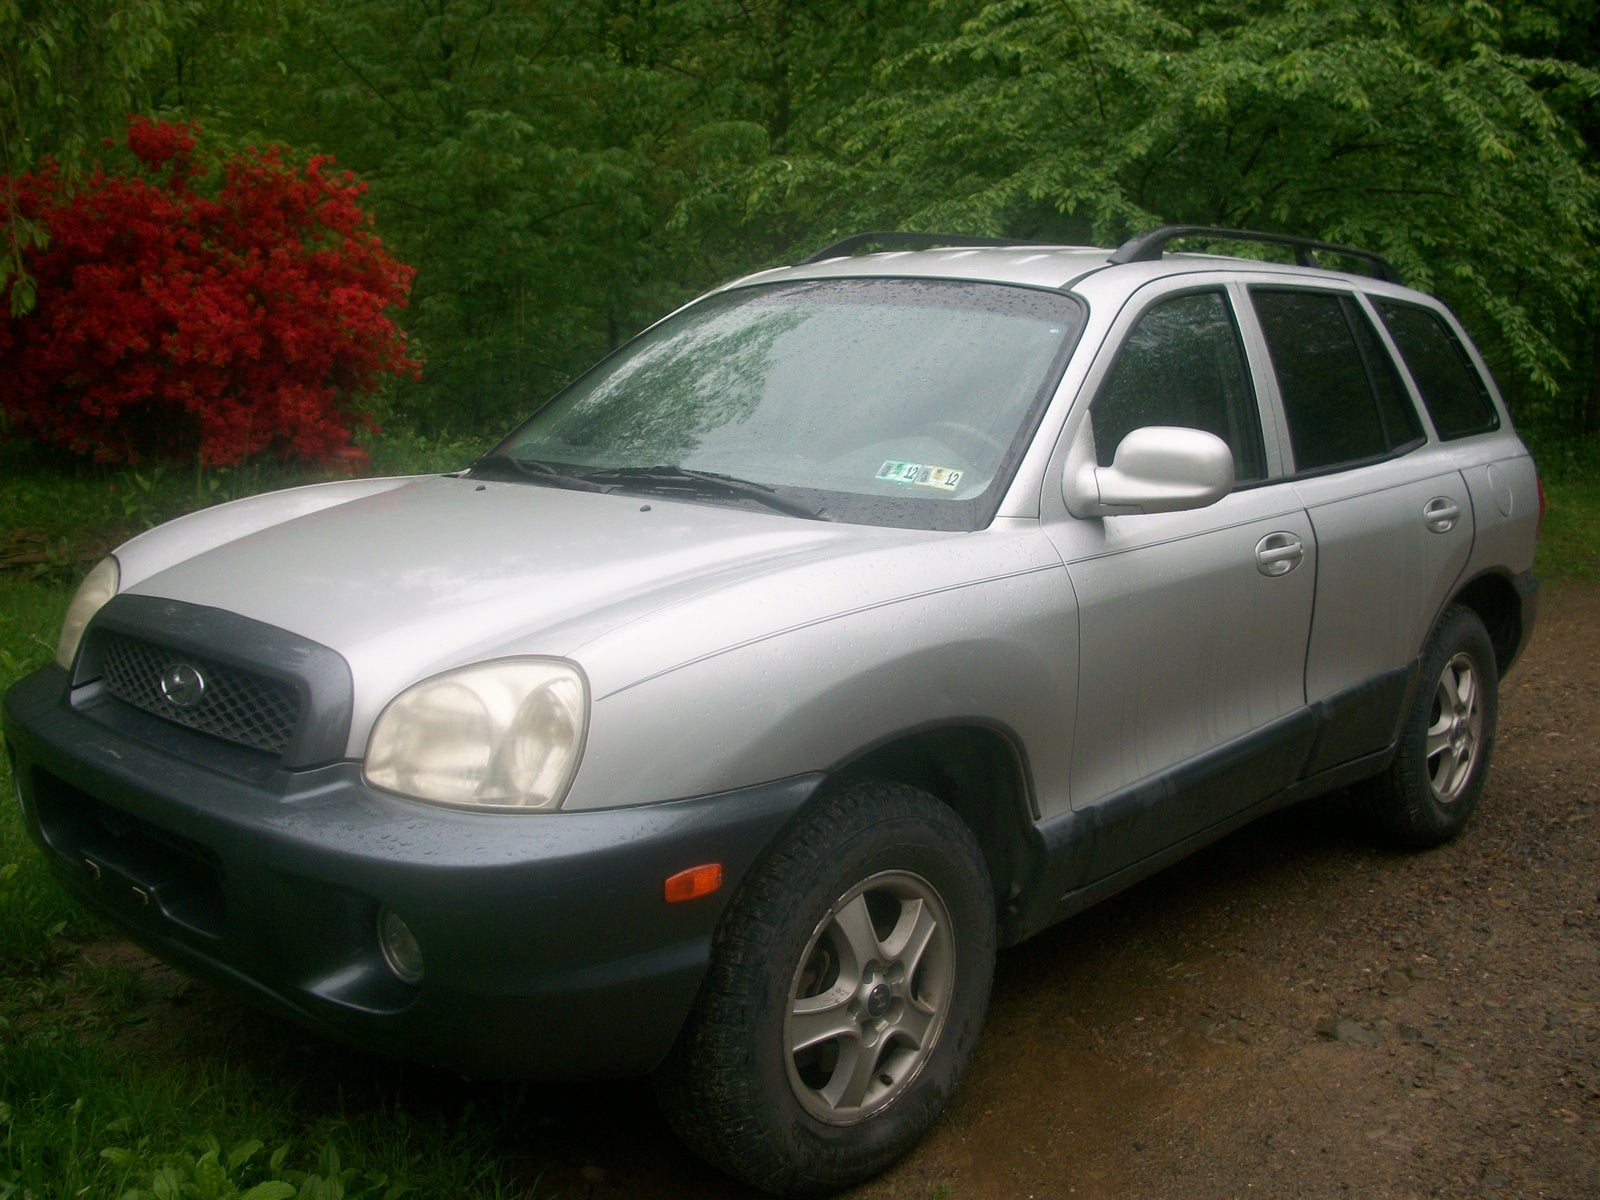 Picture of 2001 Hyundai Santa Fe GL V6 4WD, exterior